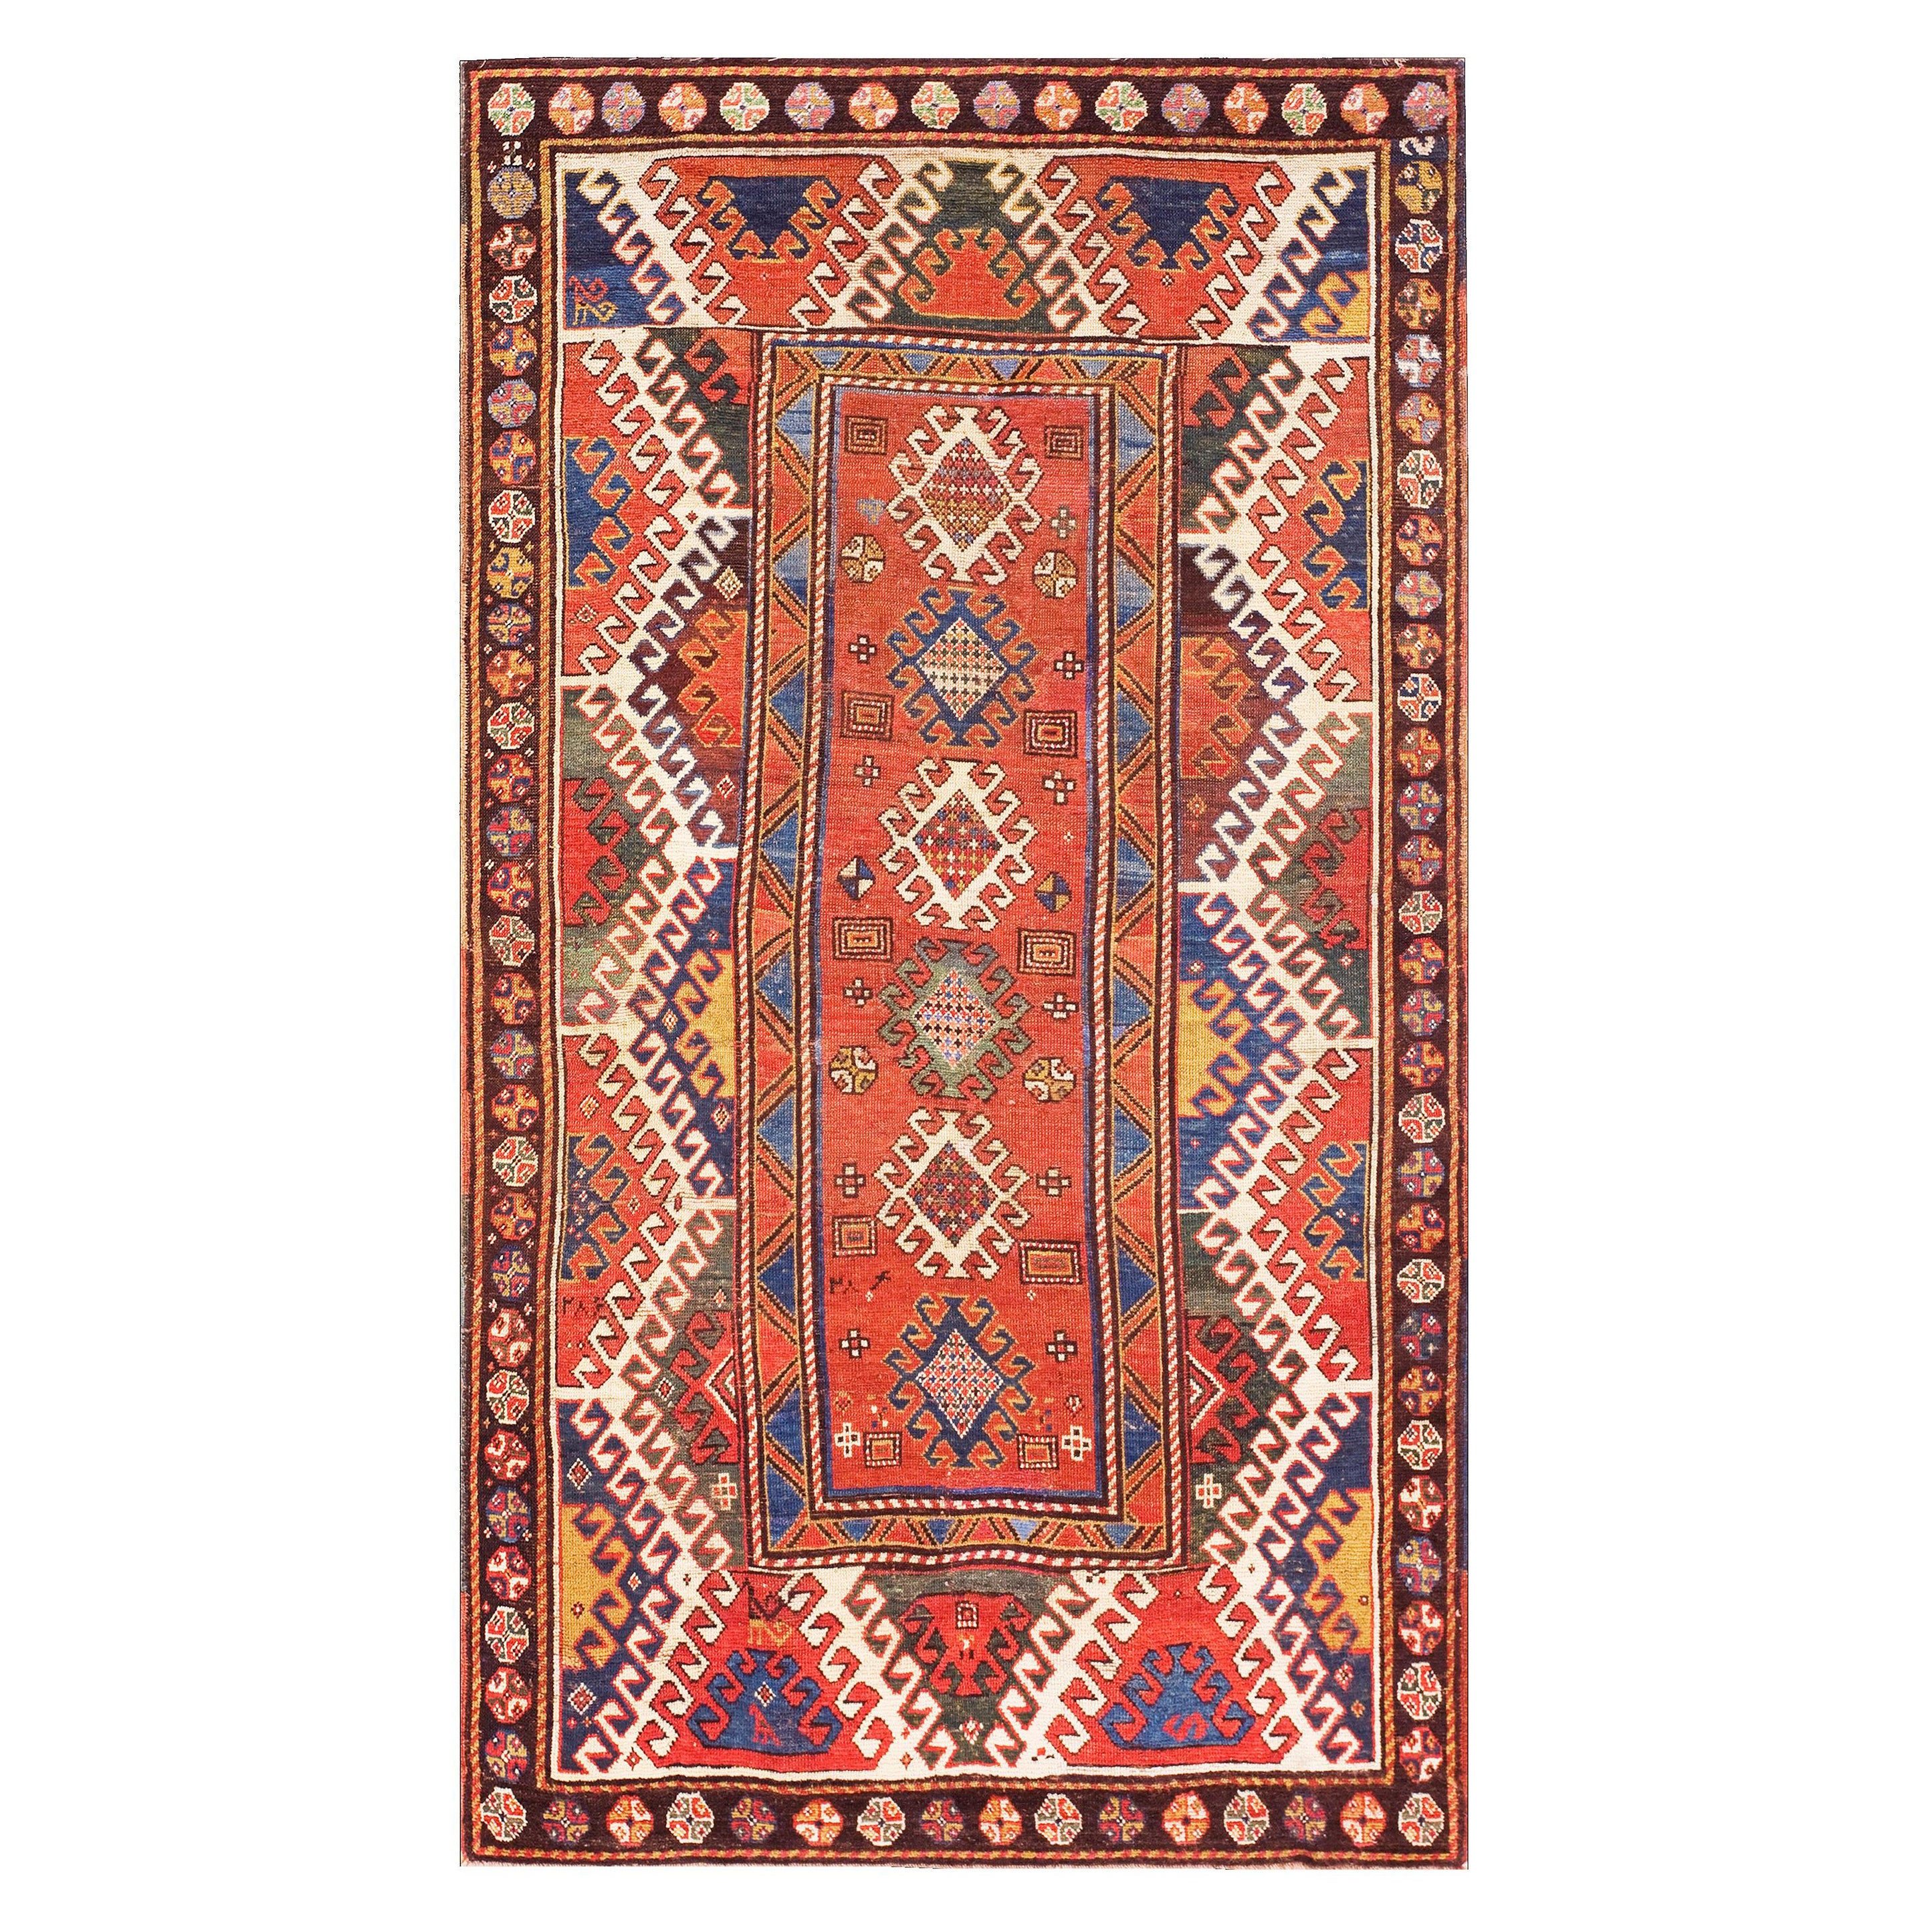 19th Century Caucasian Bordjalou Kazak Carpet ( 4'3" x 7'5" - 130 x 226 ) For Sale